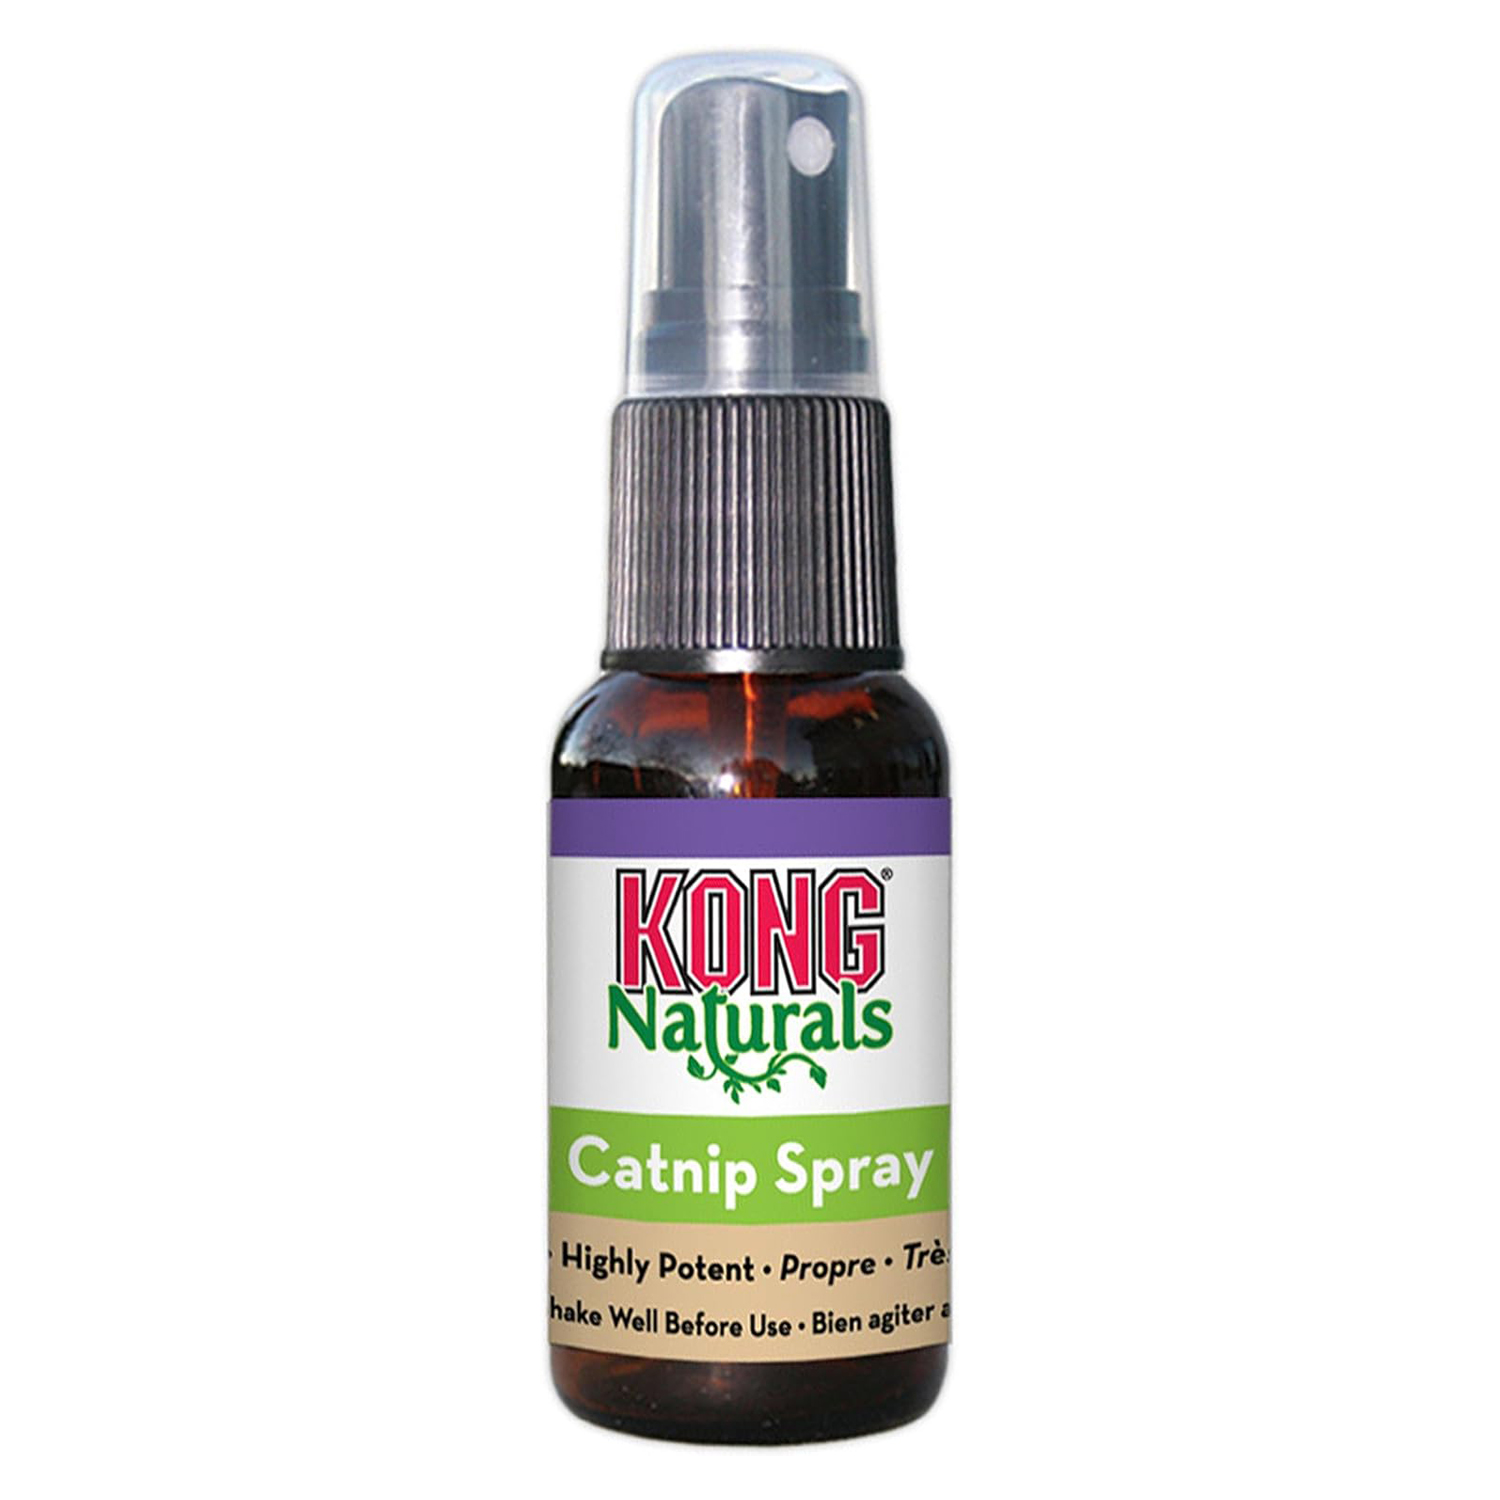 KONG - Naturals Catnip Spray for Cats